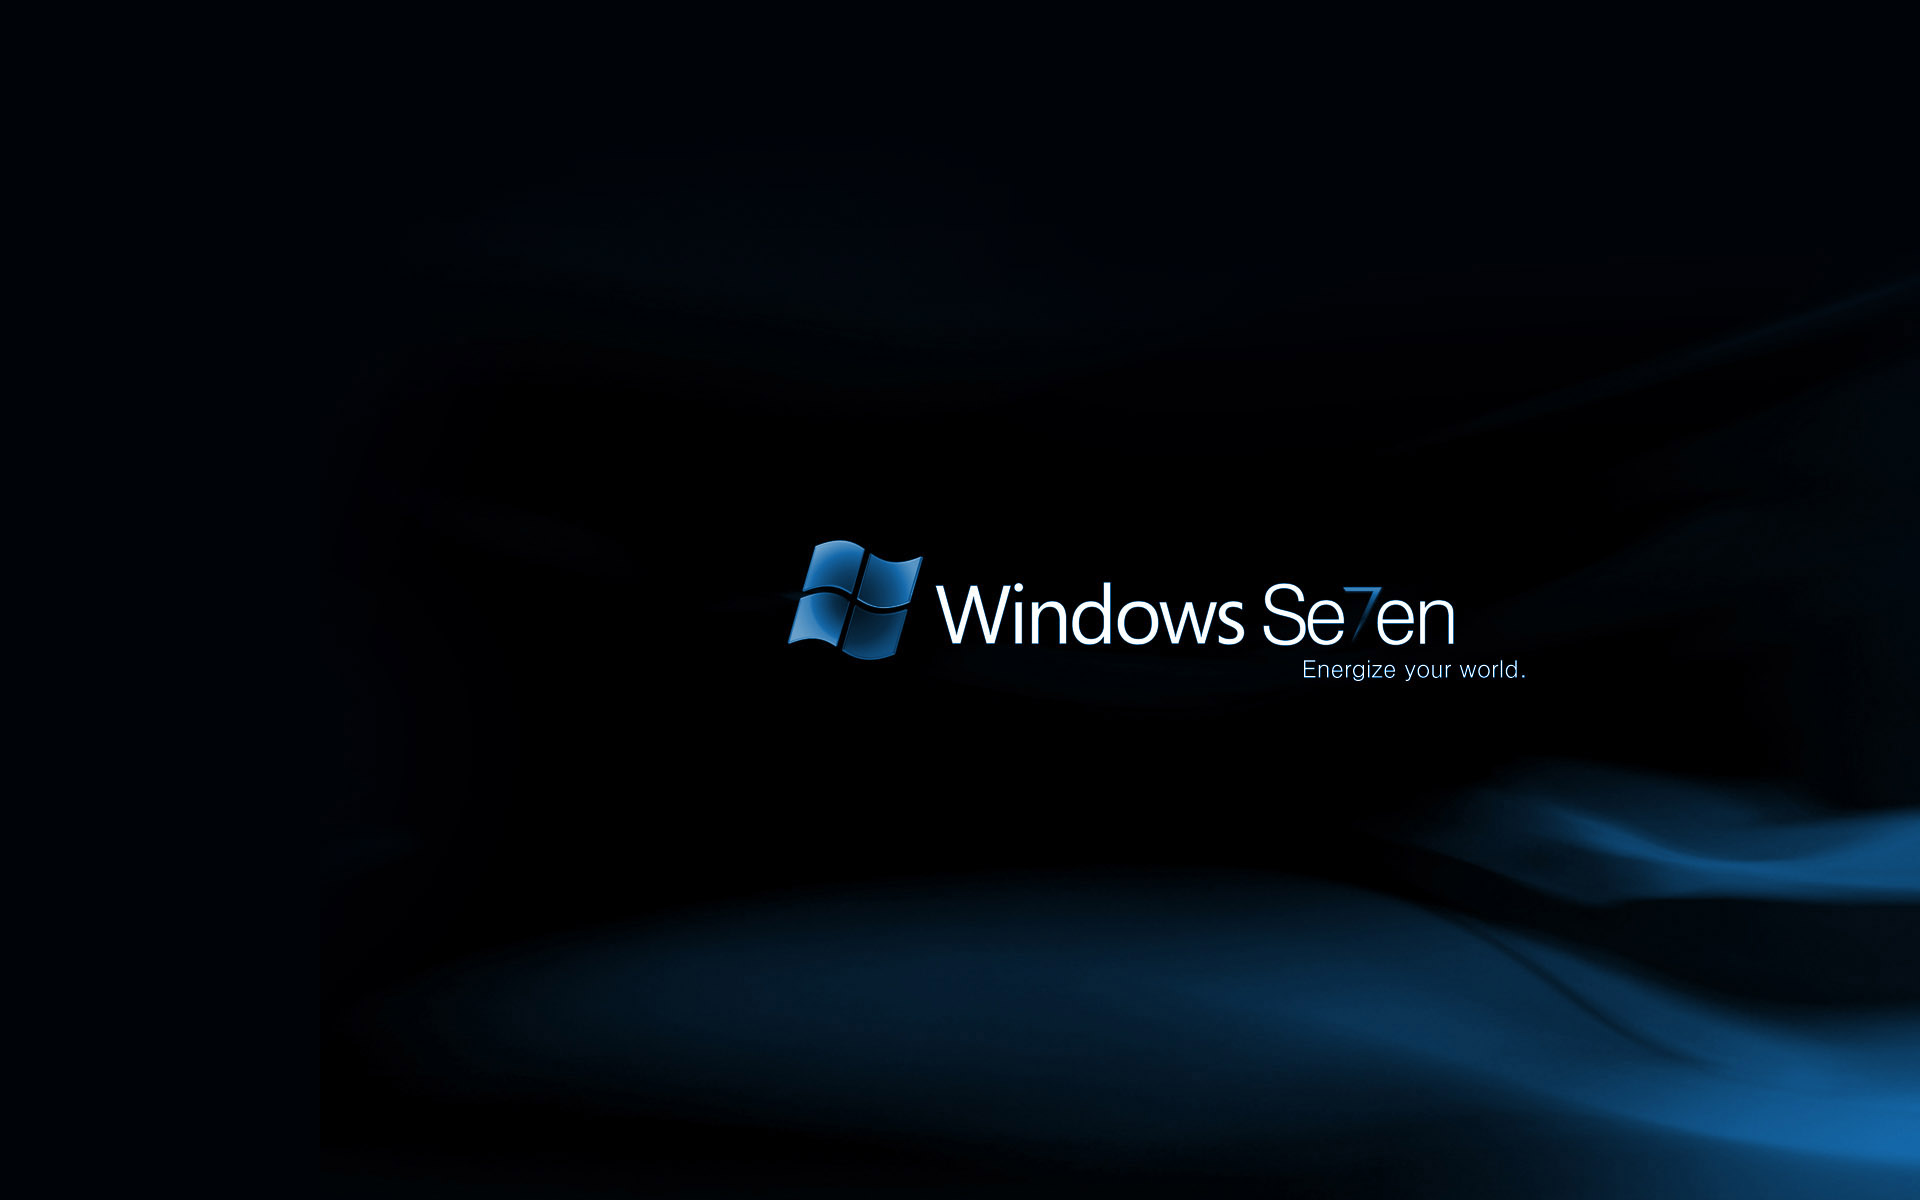 Windows 7 Backgrounds 2